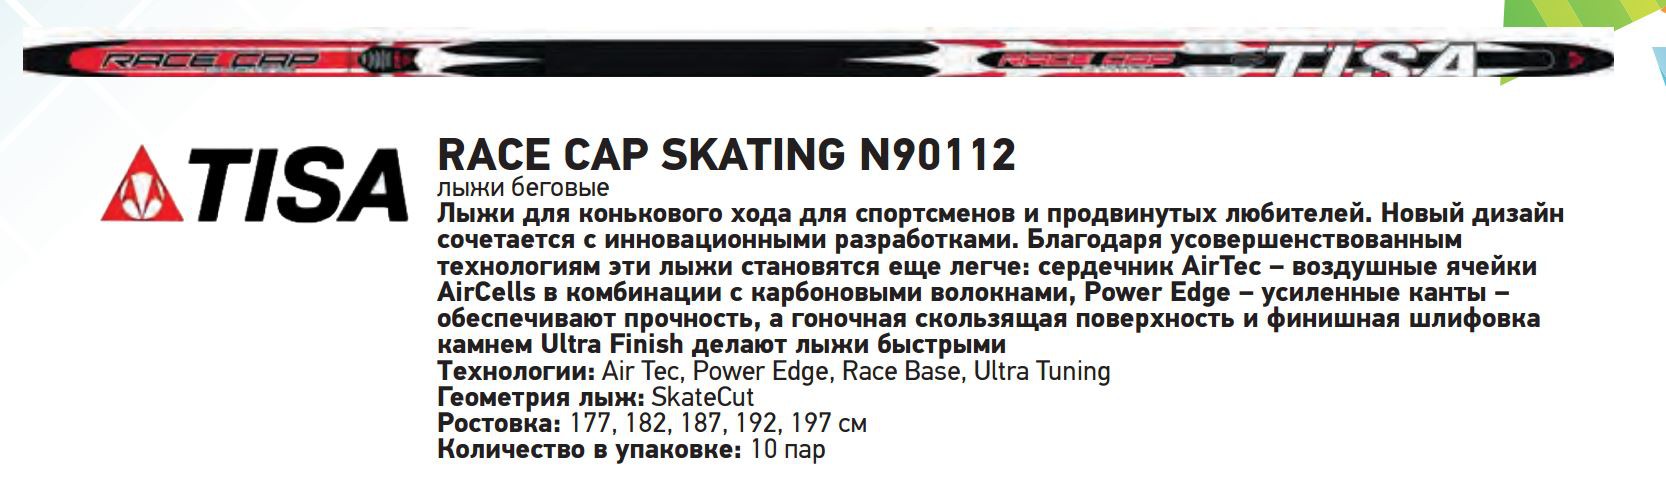   TISA RACE CAP SKATING N90112